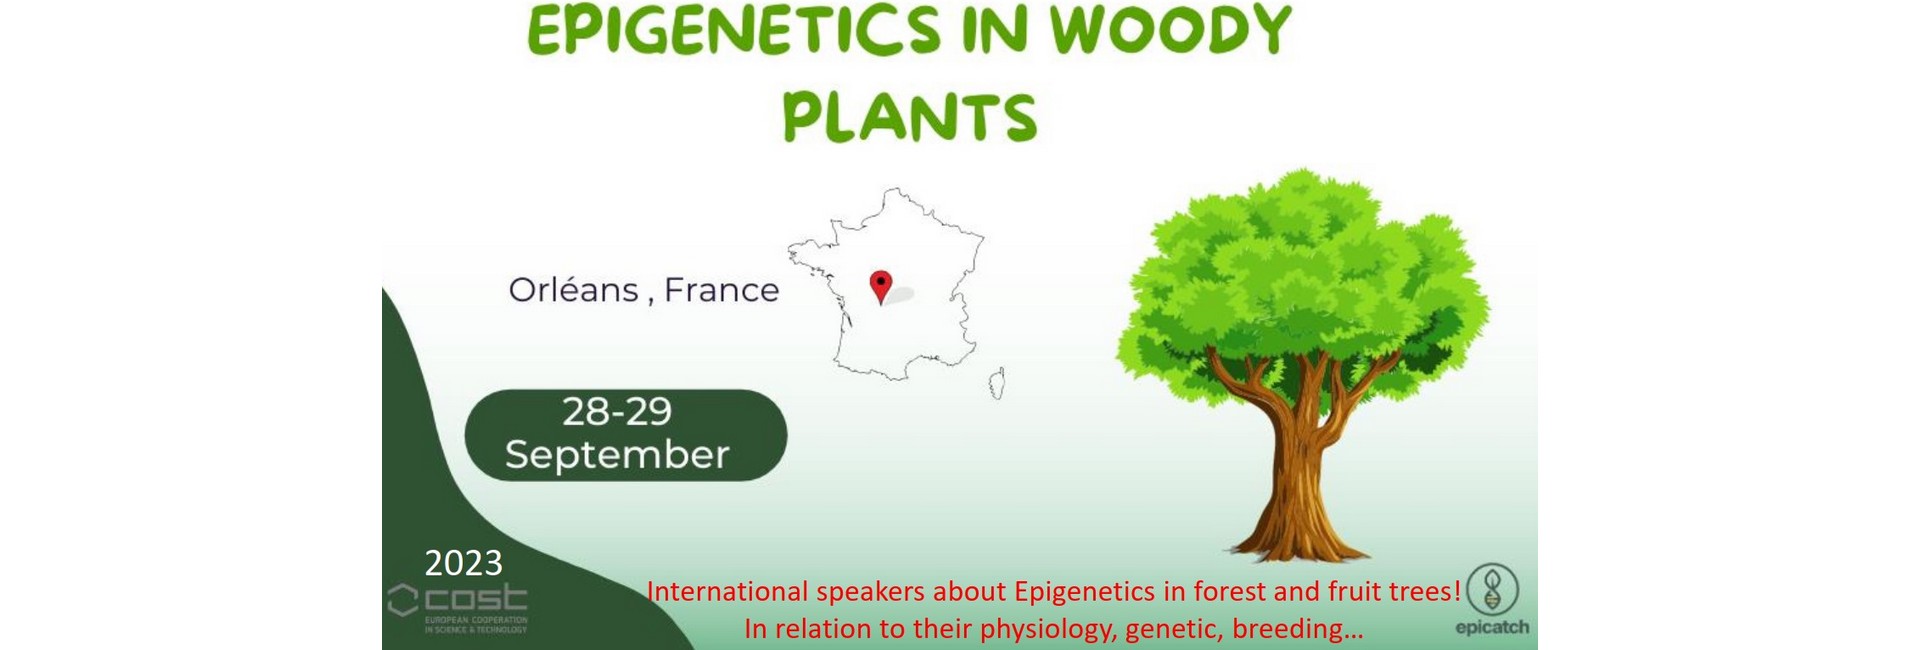  EPIGENETICS-IN-WOODY-PLANTS